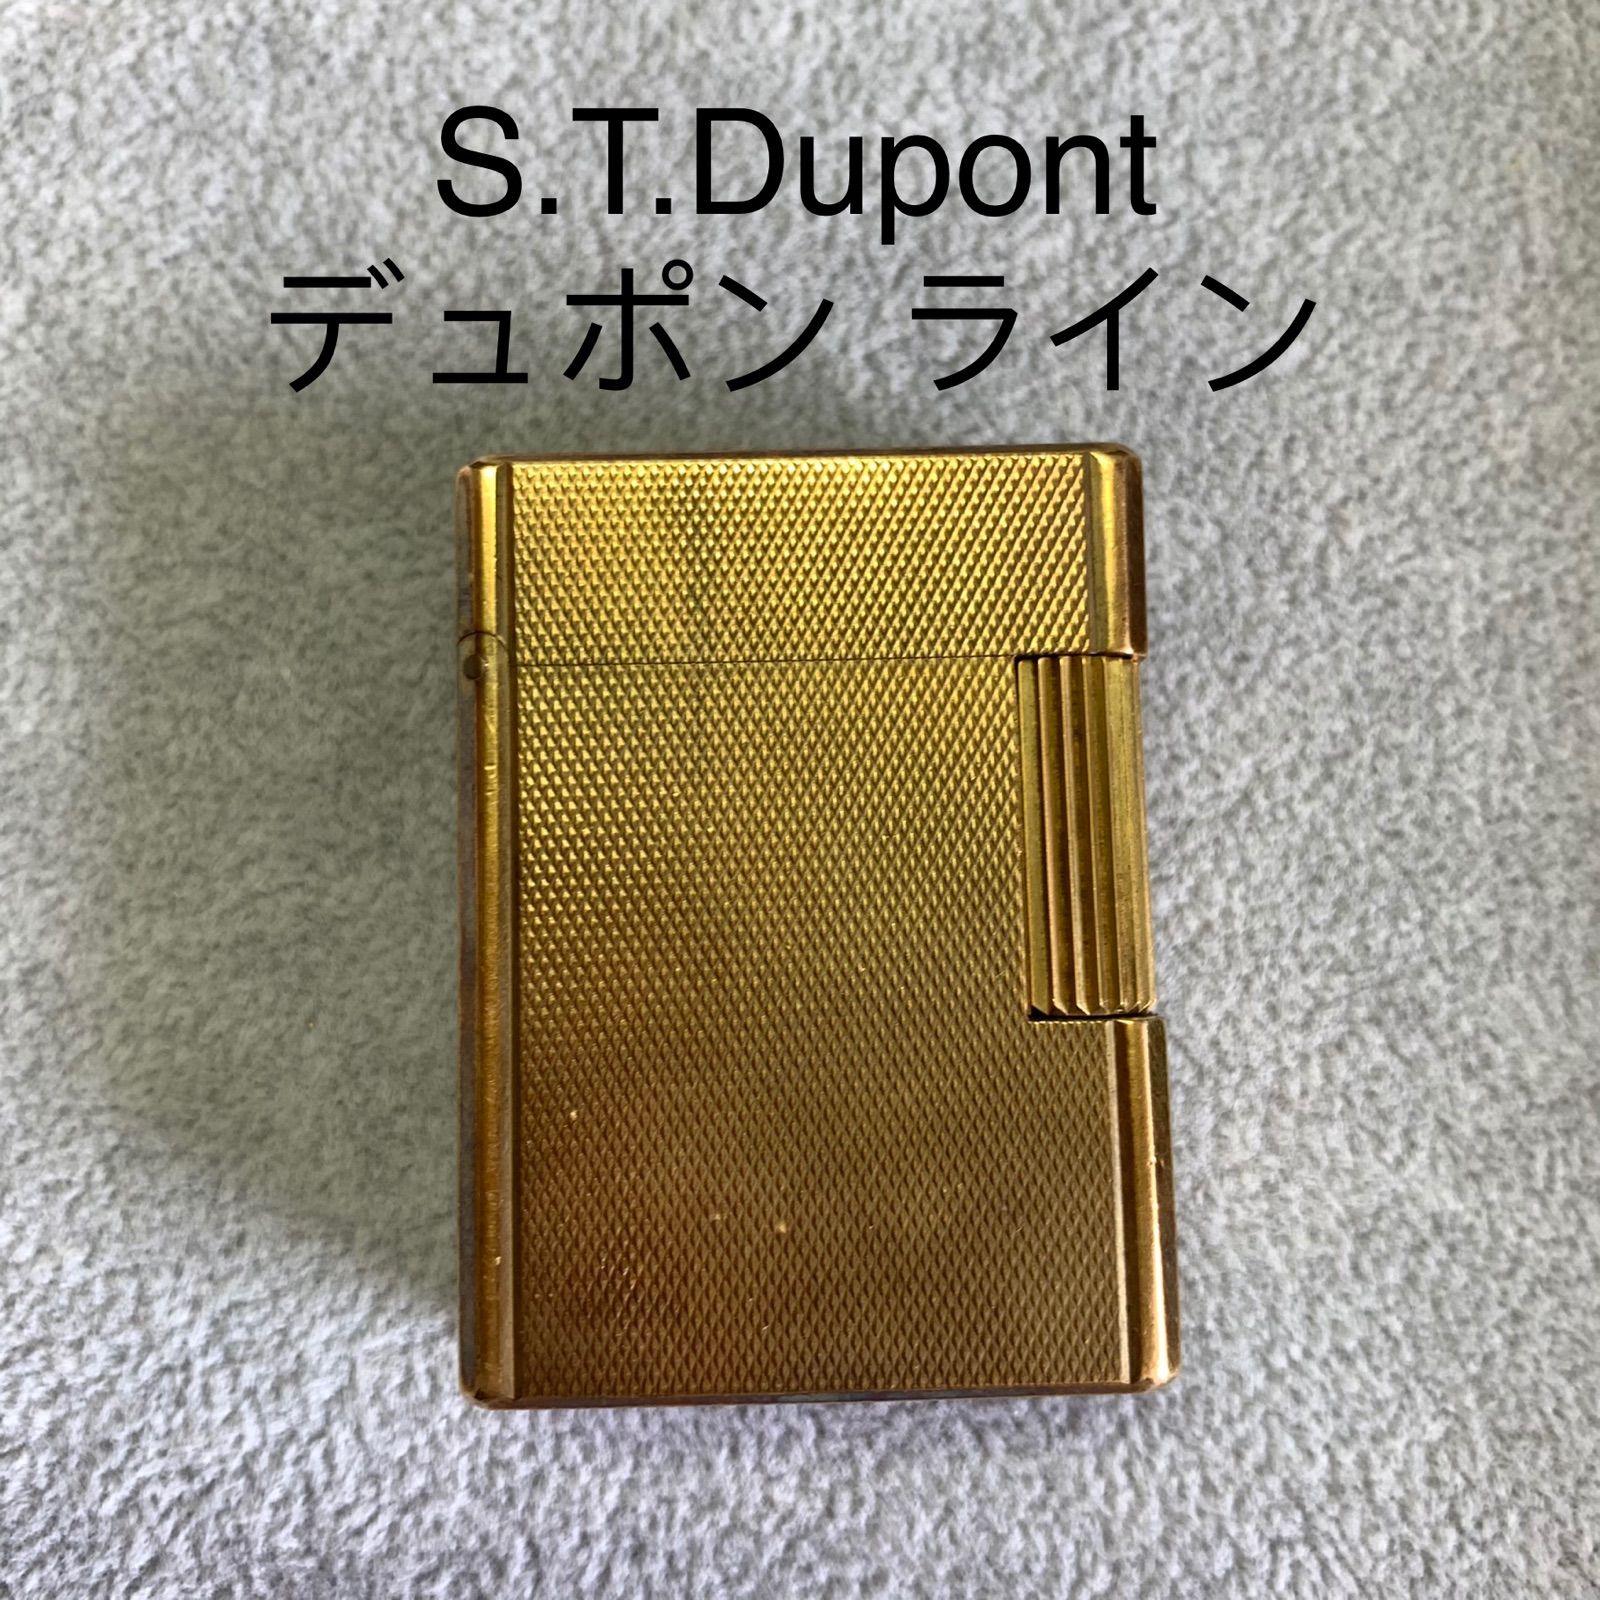 S.T.DUPONTデュポン ライター ゴールド - KTVTG - メルカリ